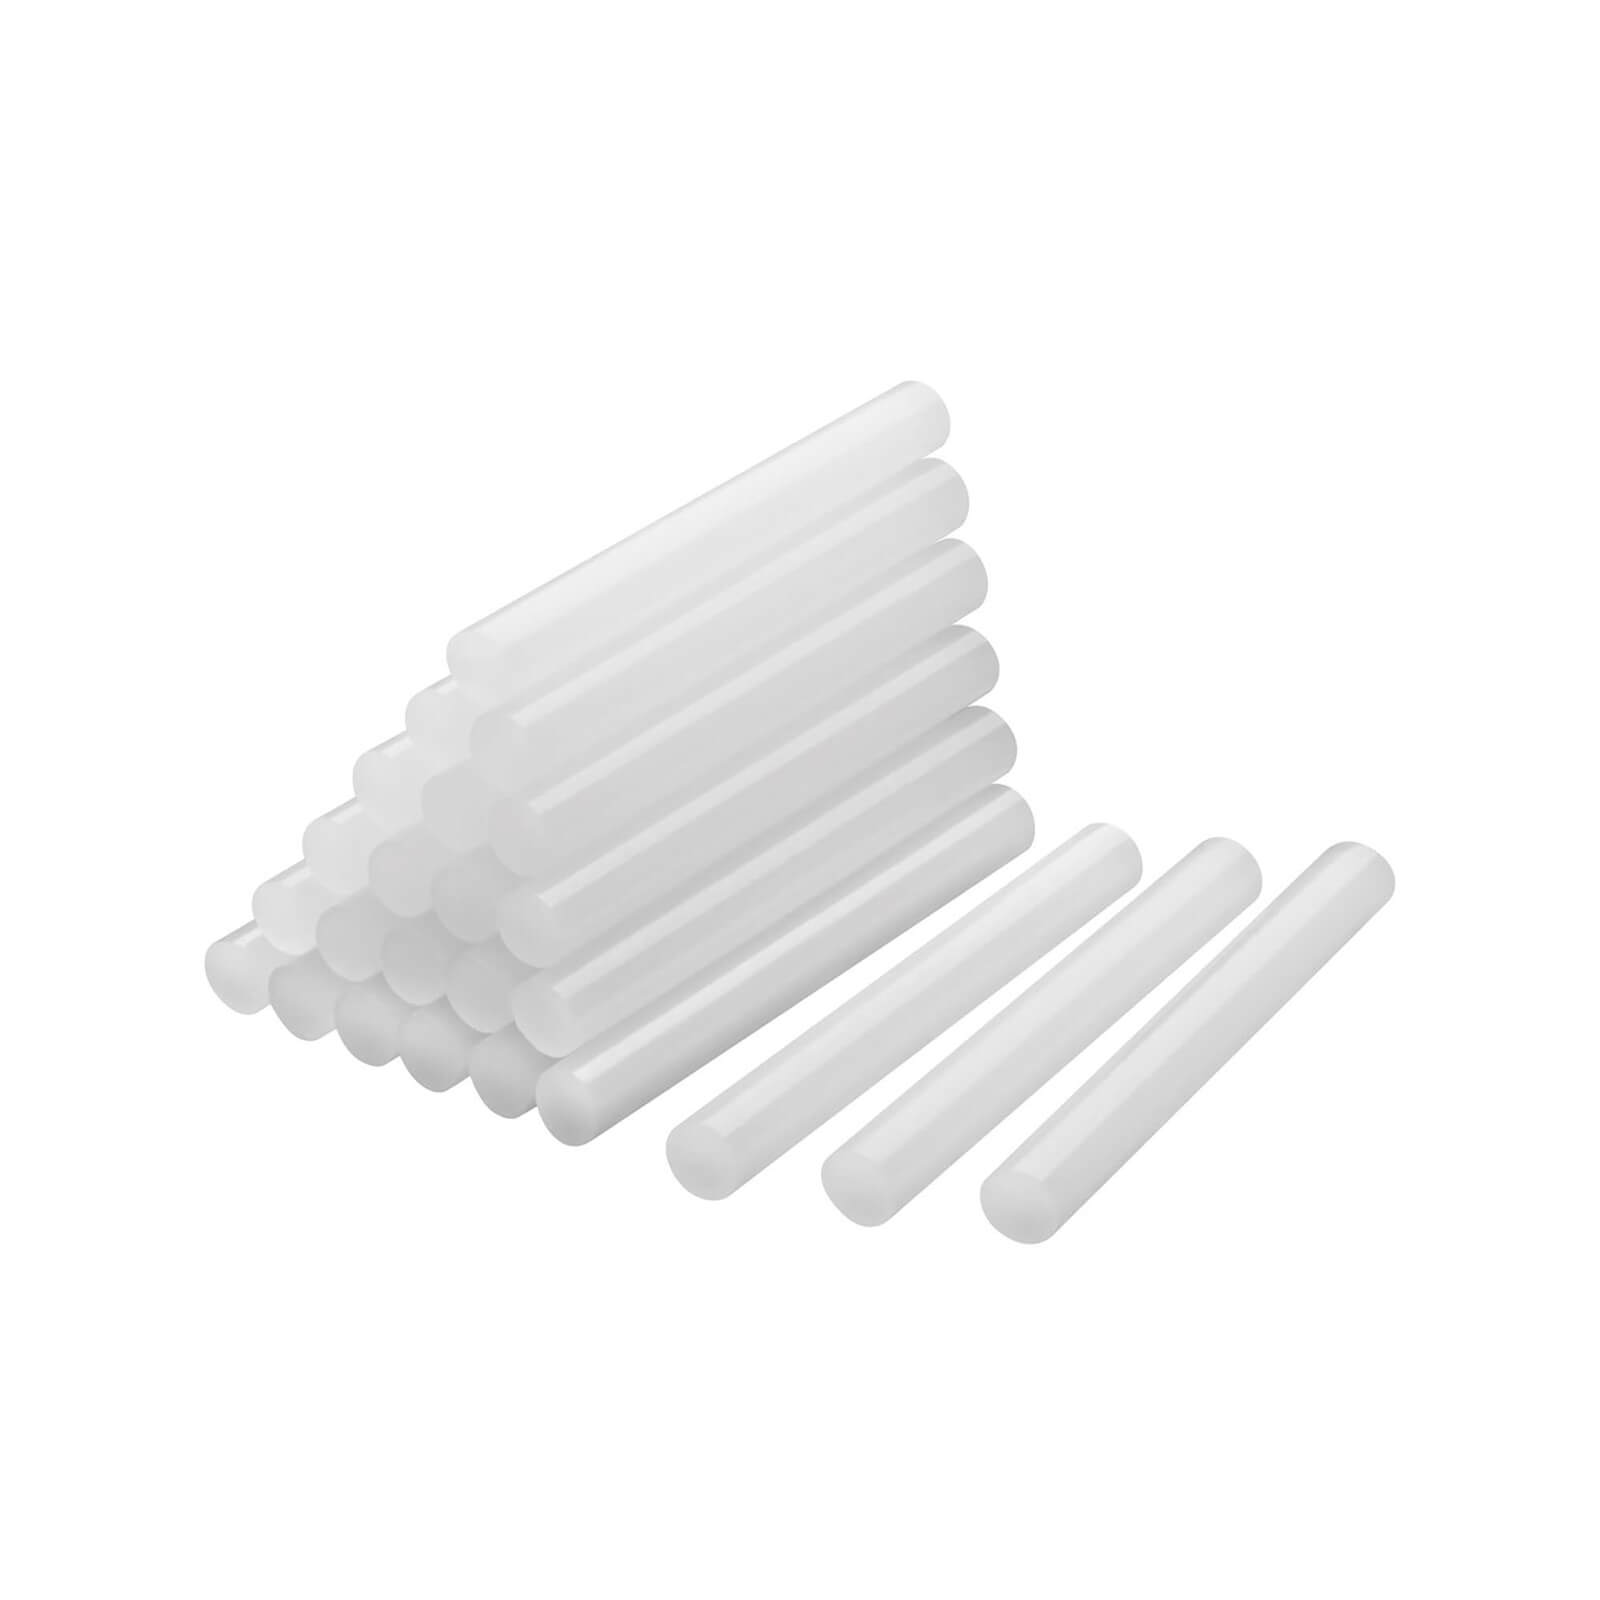 STANLEY General Purpose 12x101mm Glue Sticks – Pack of 24 (STHT1-70429)